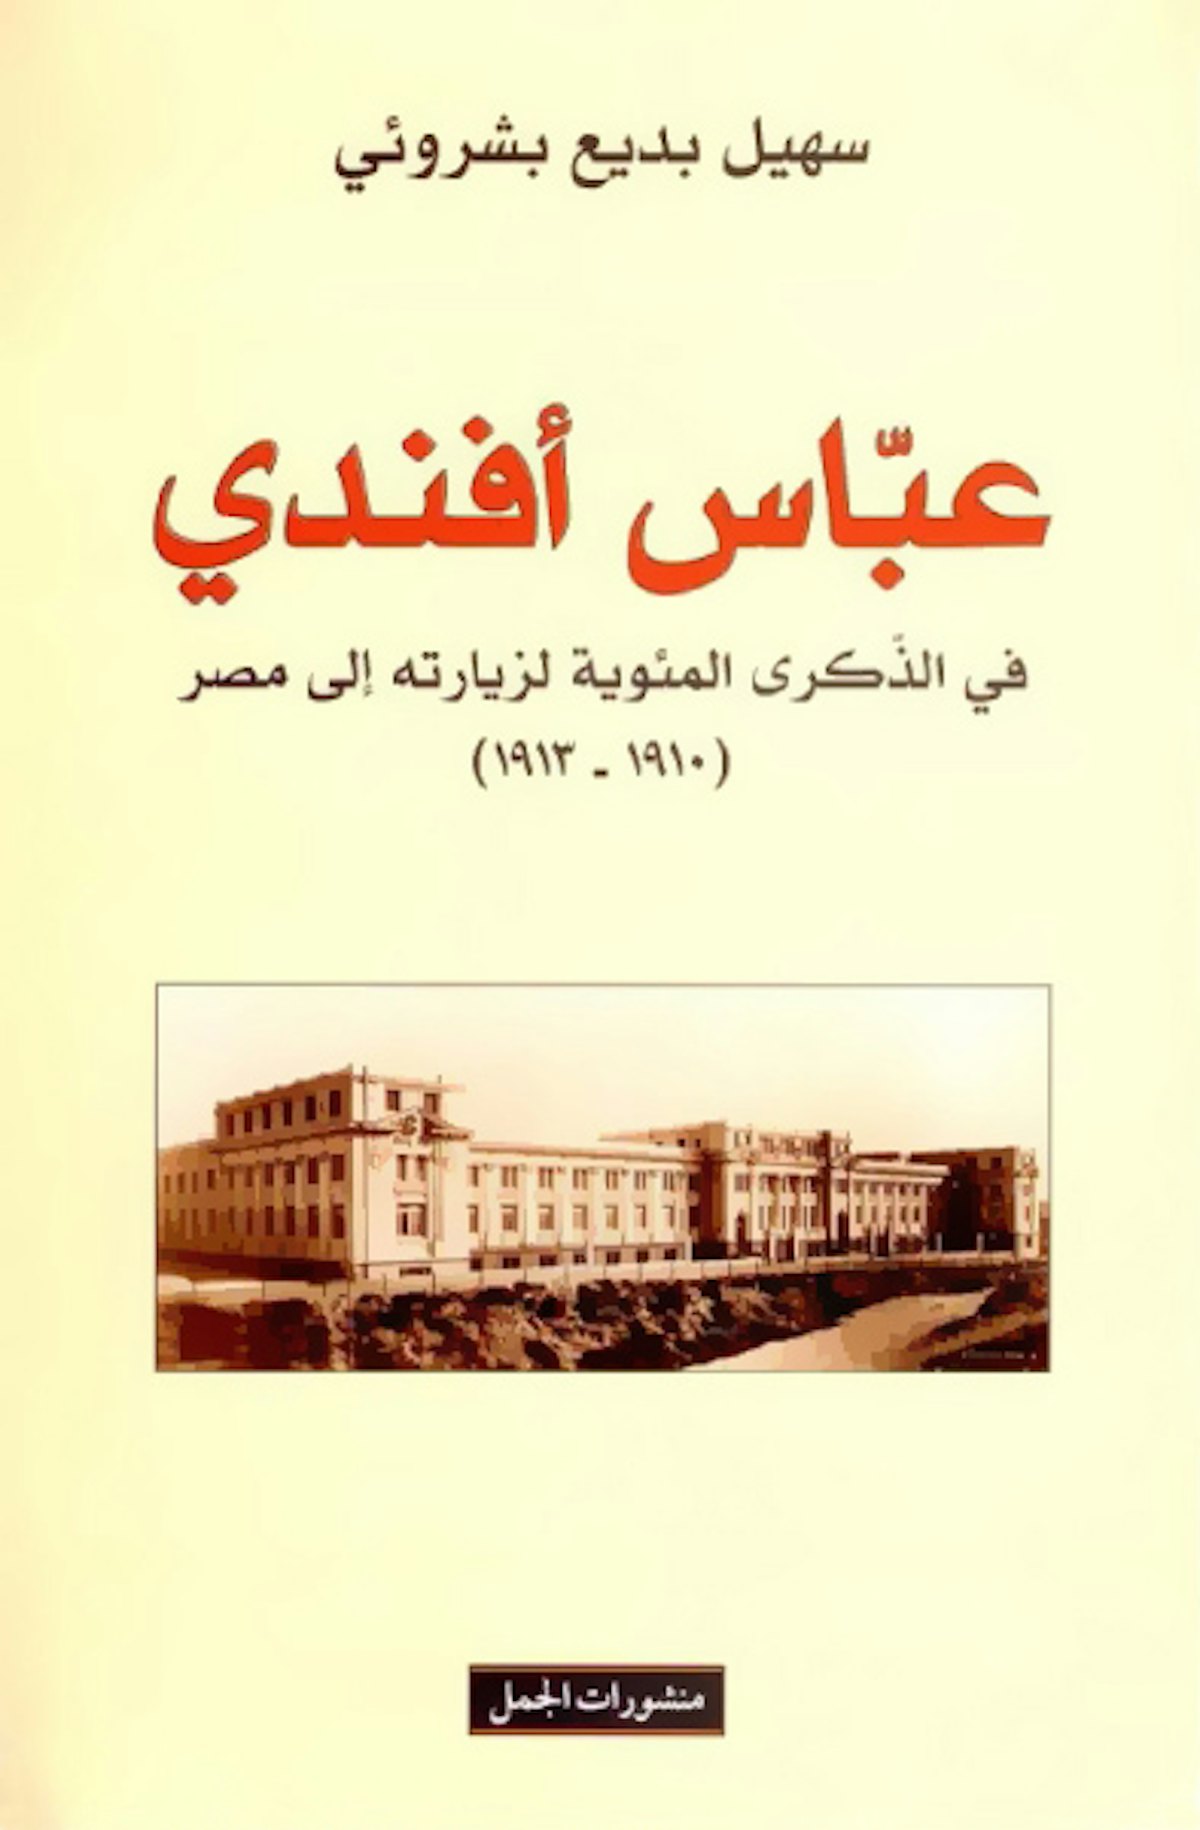 The cover of Suheil Bushrui's book, titled "Abbas Effendi", depicting a historic view of Alexandria.